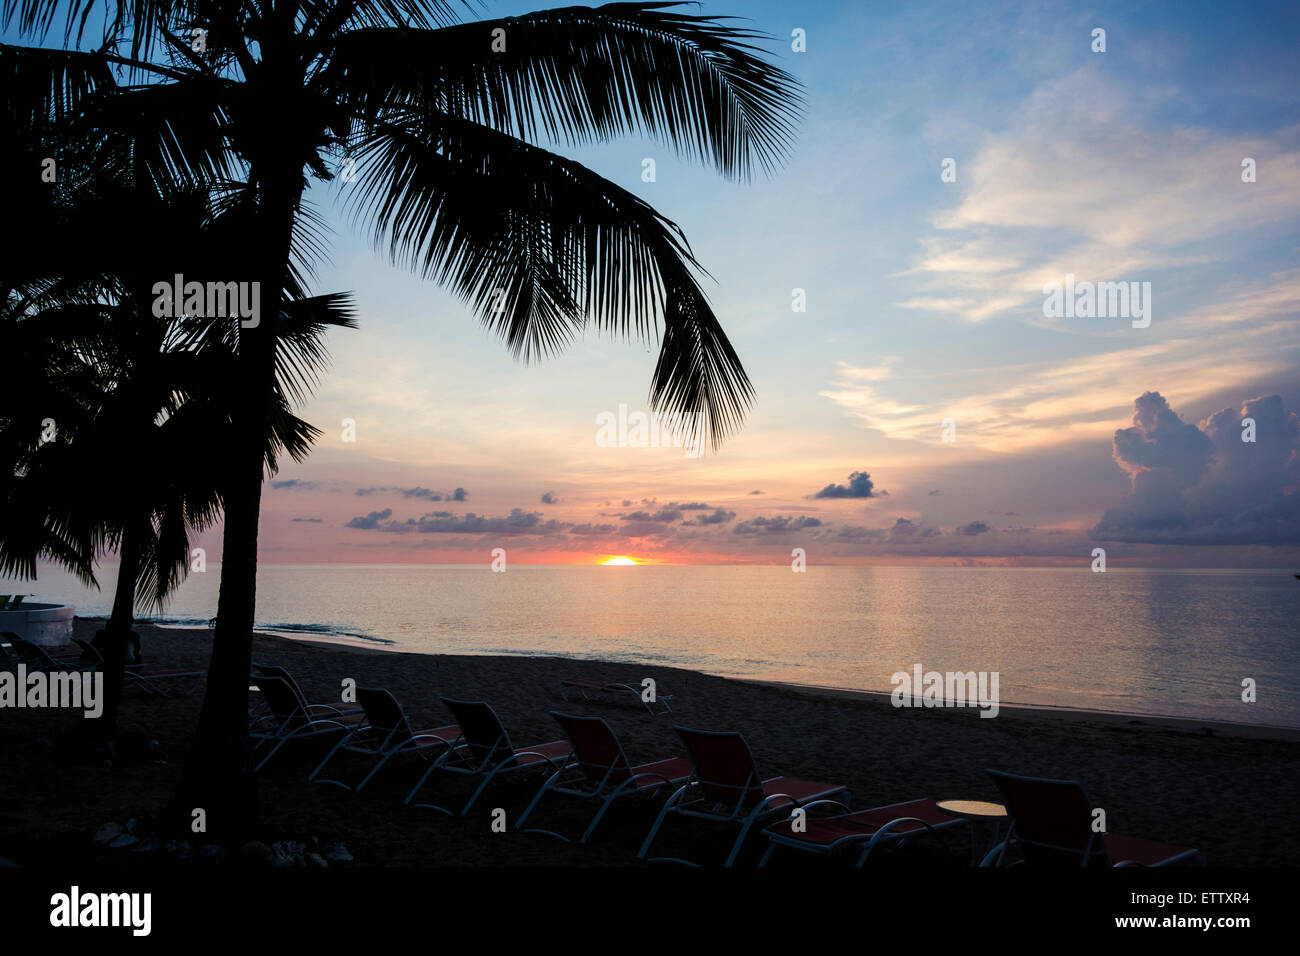 The sun sets through coconut palms over the Caribbean sea off St. Croix, US Virgin Islands. Stock Photo